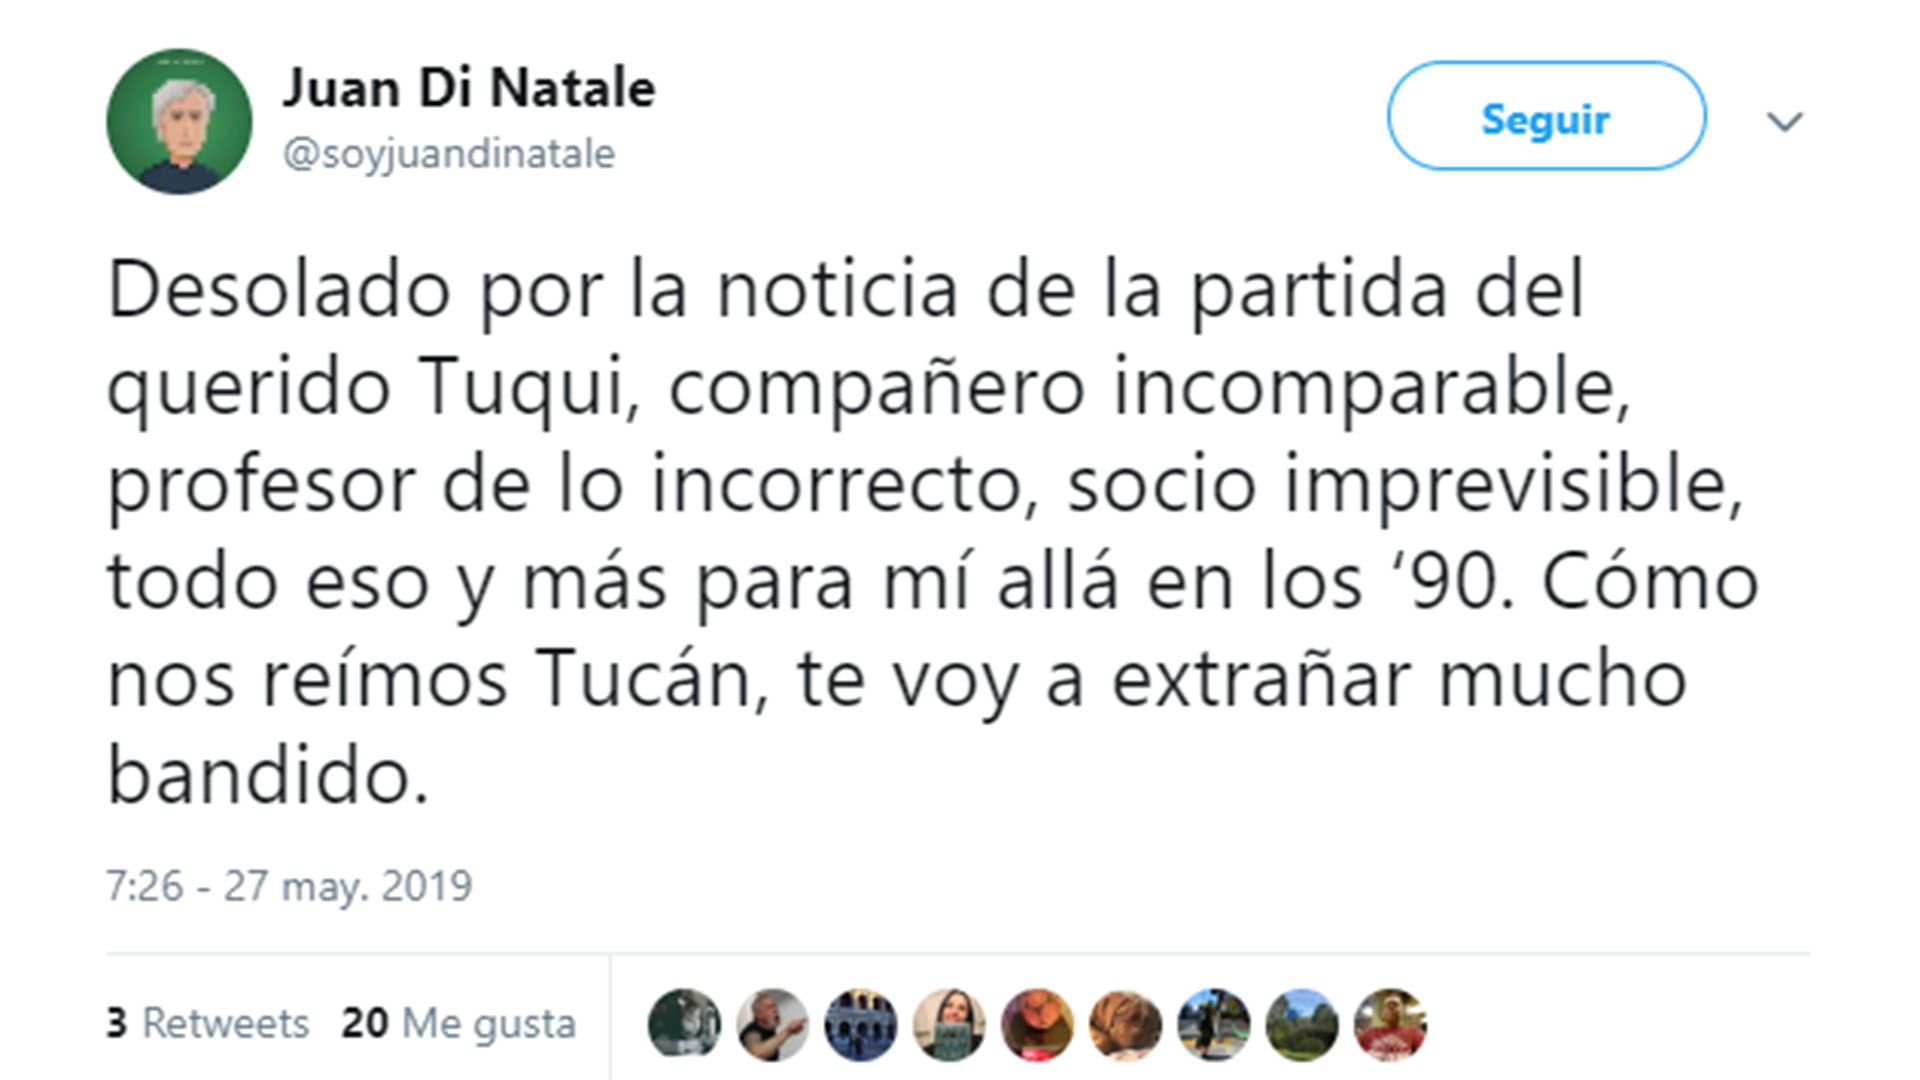 El conmovedor mensaje que publicó Juan Di Natale sobre la pérdida de su colega (Twitter)